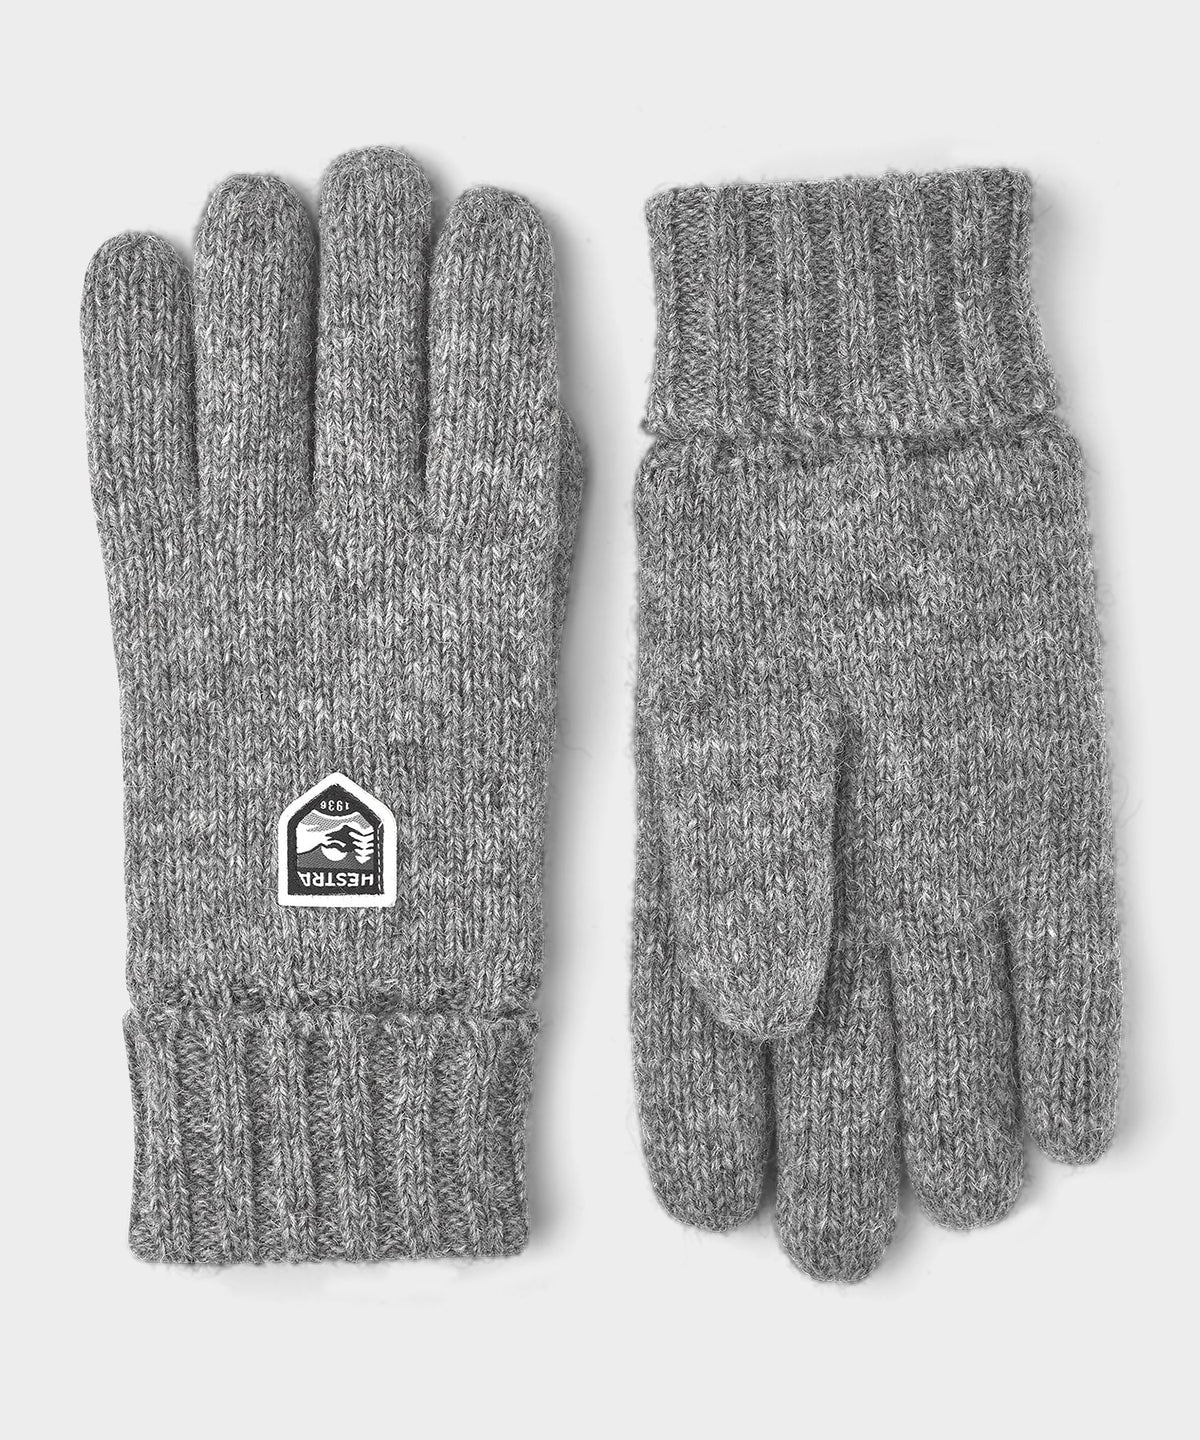 Hestra Basic Wool Glove Grey